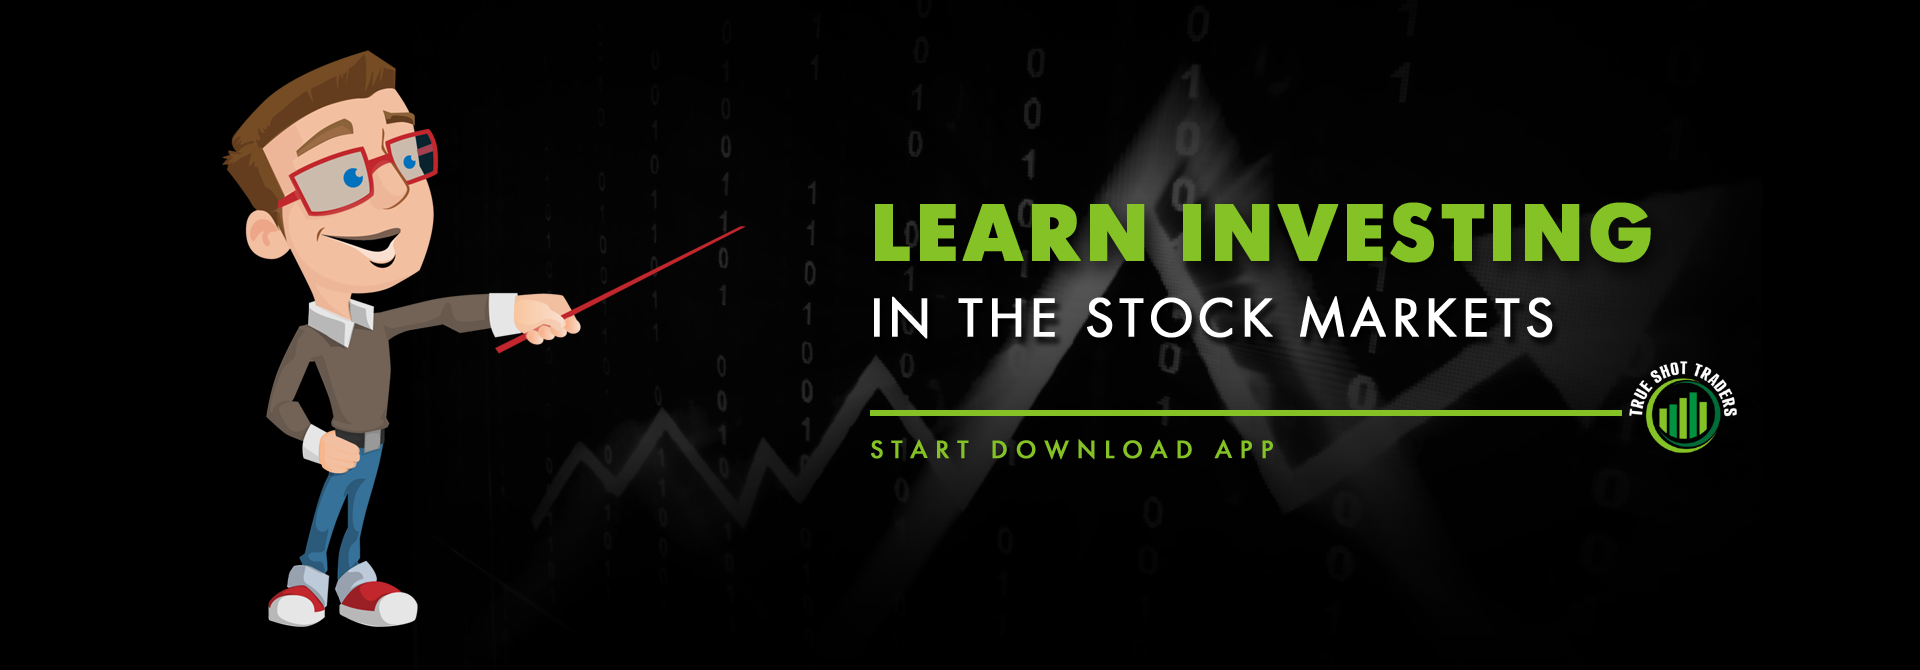 stock trading investing app